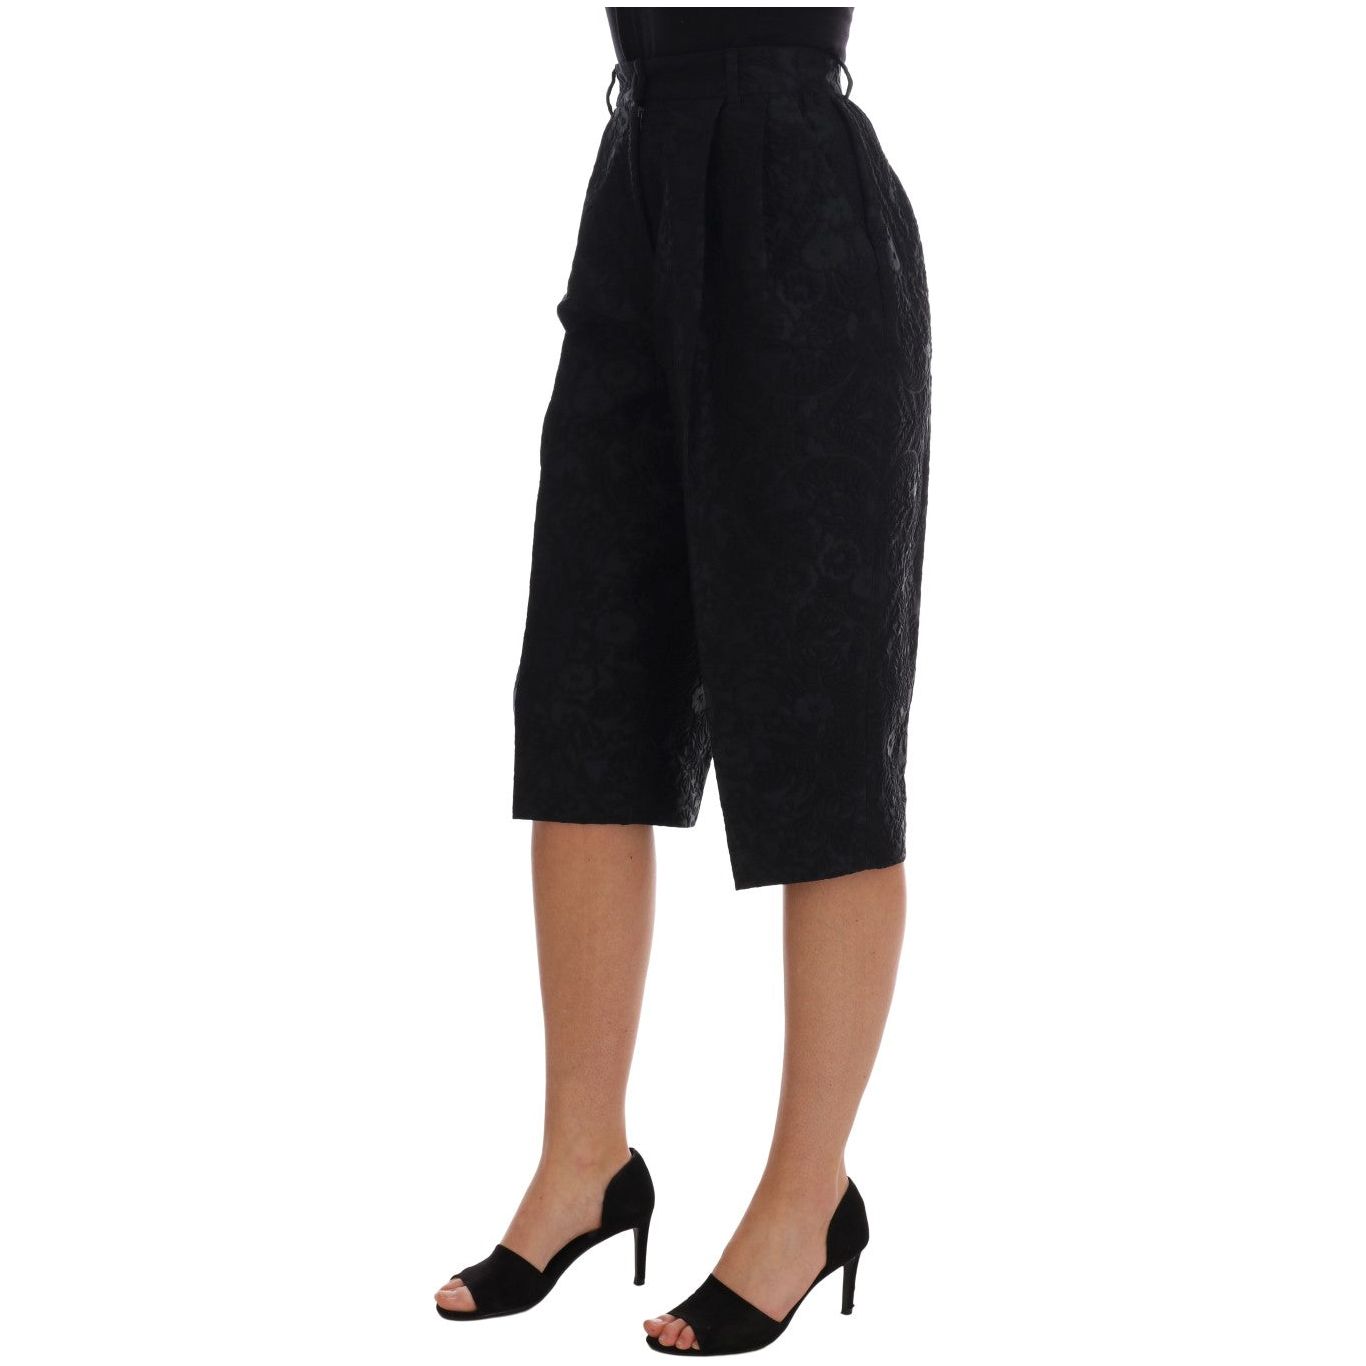 Dolce & Gabbana Elegant Floral Brocade Dress Shorts black-brocade-high-waist-capri-shorts Jeans & Pants 513087-black-brocade-high-waist-capri-shorts-1.jpg